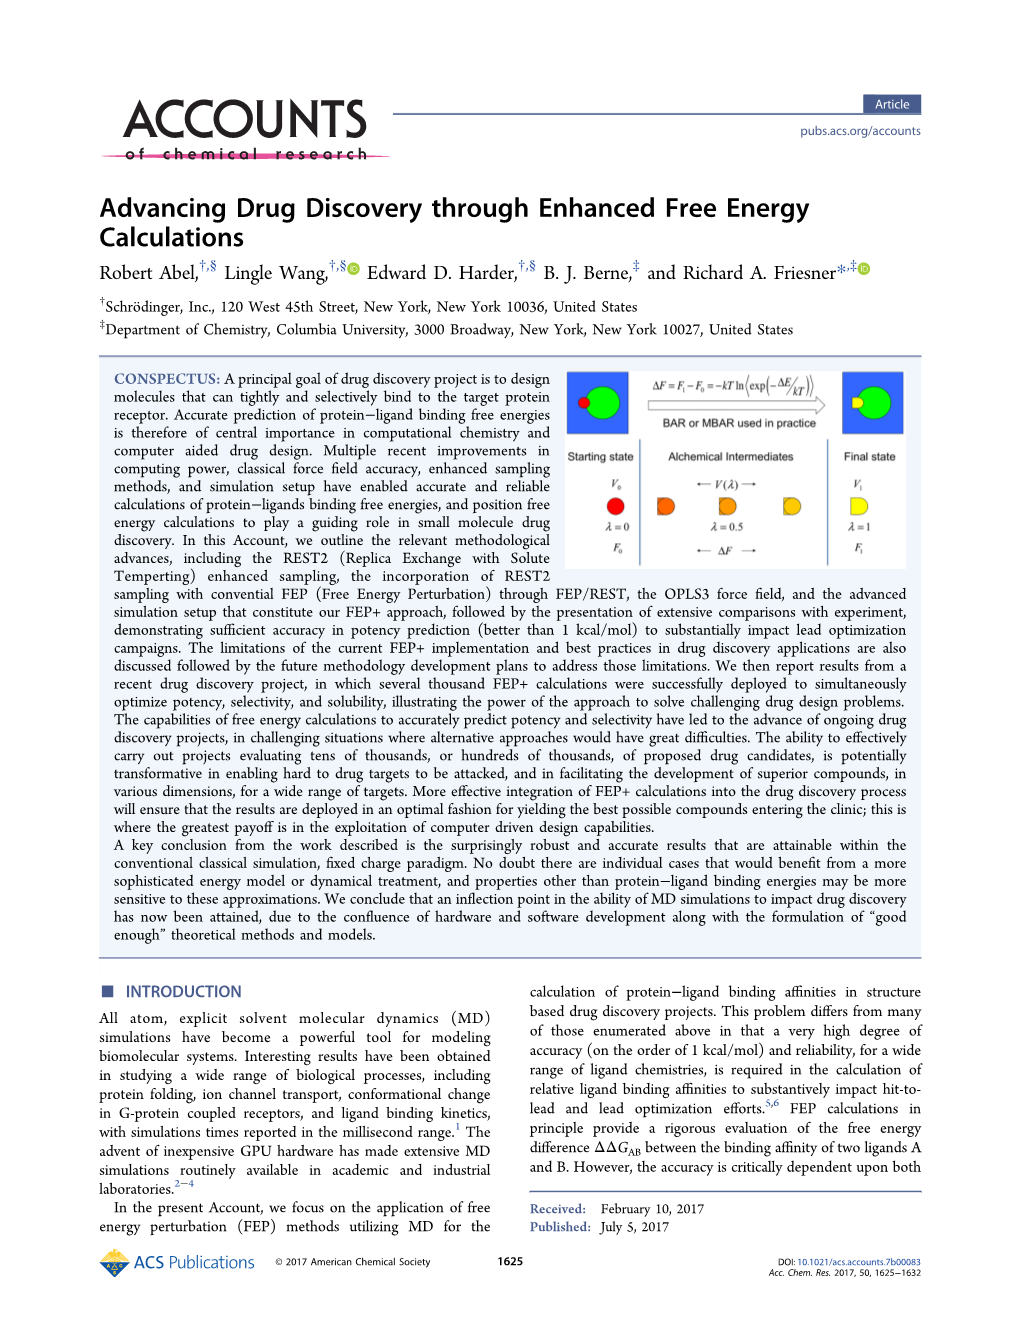 Advancing Drug Discovery Through Enhanced Free Energy Calculations † § † § † § ‡ ‡ Robert Abel, , Lingle Wang, , Edward D